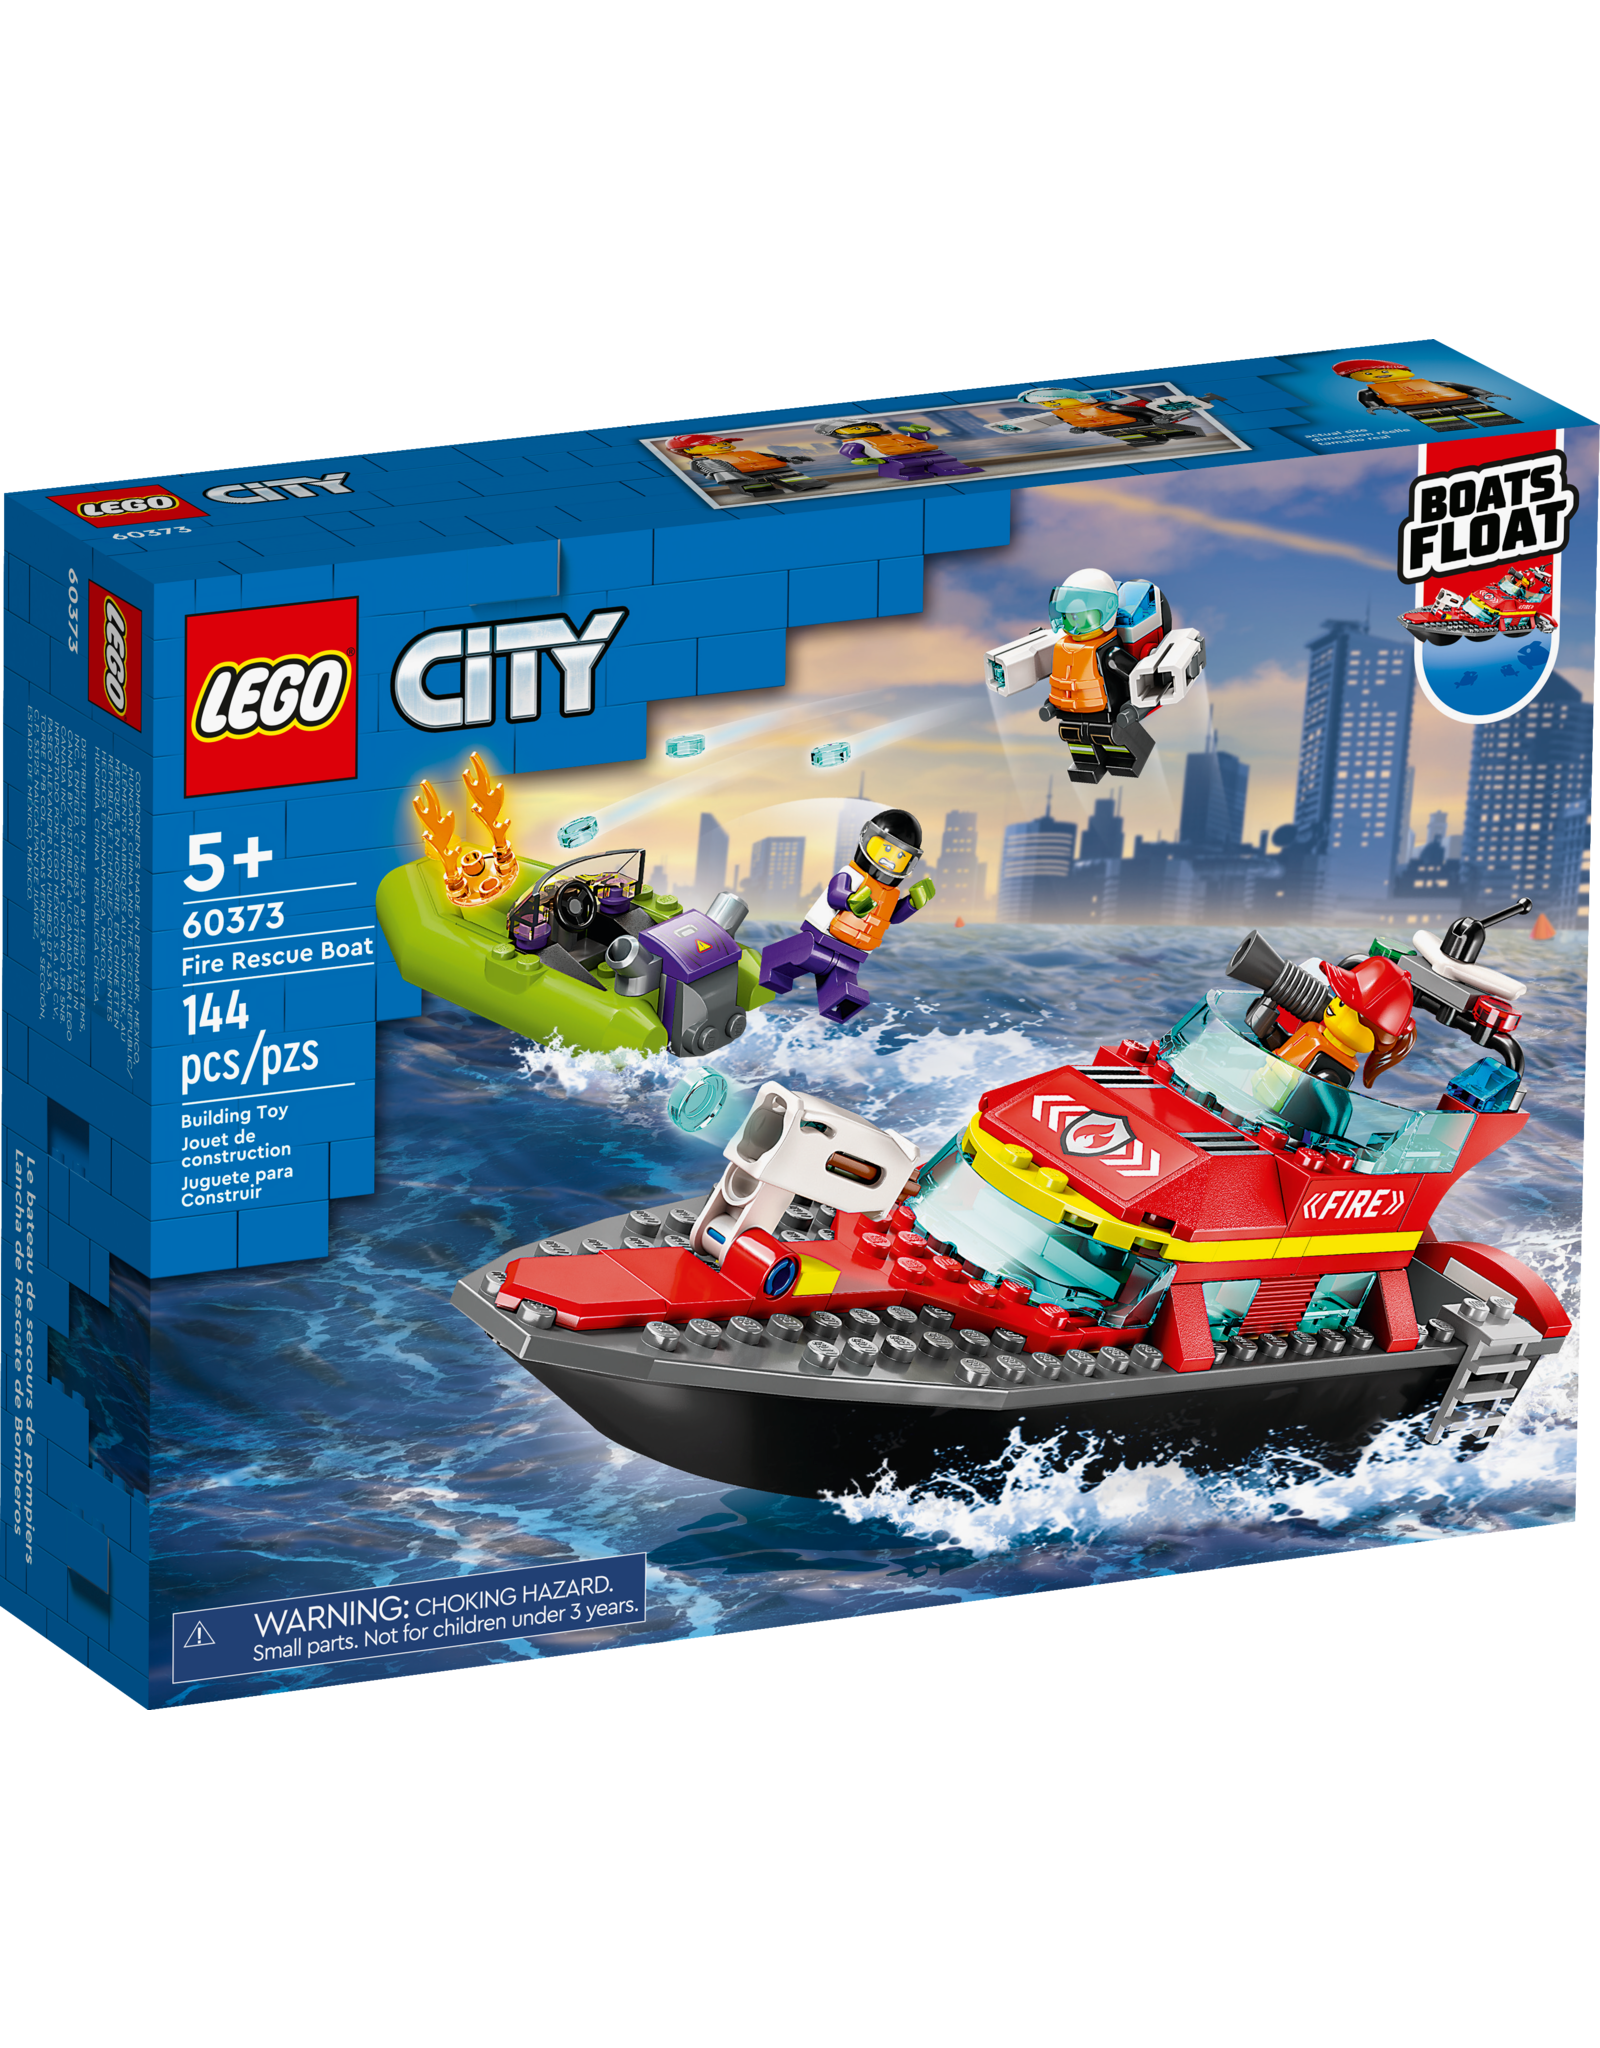 LEGO City Fire 60373 Fire Rescue Boat